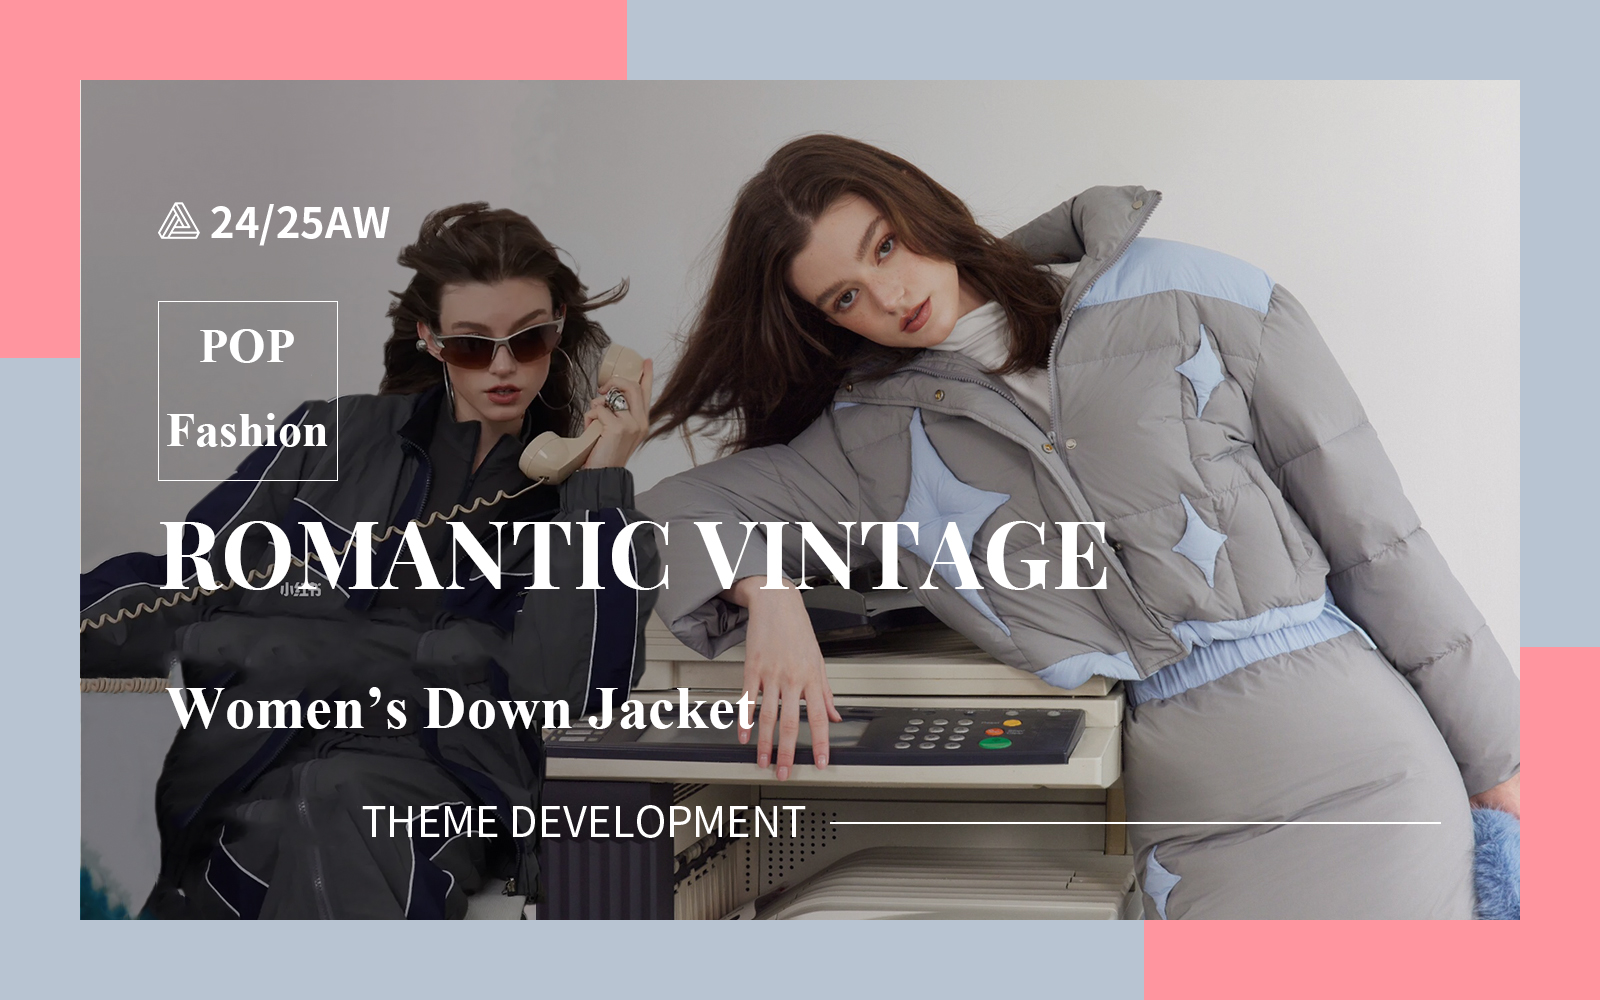 Romantic Vintage -- The Design Development of Women's Down Jacket